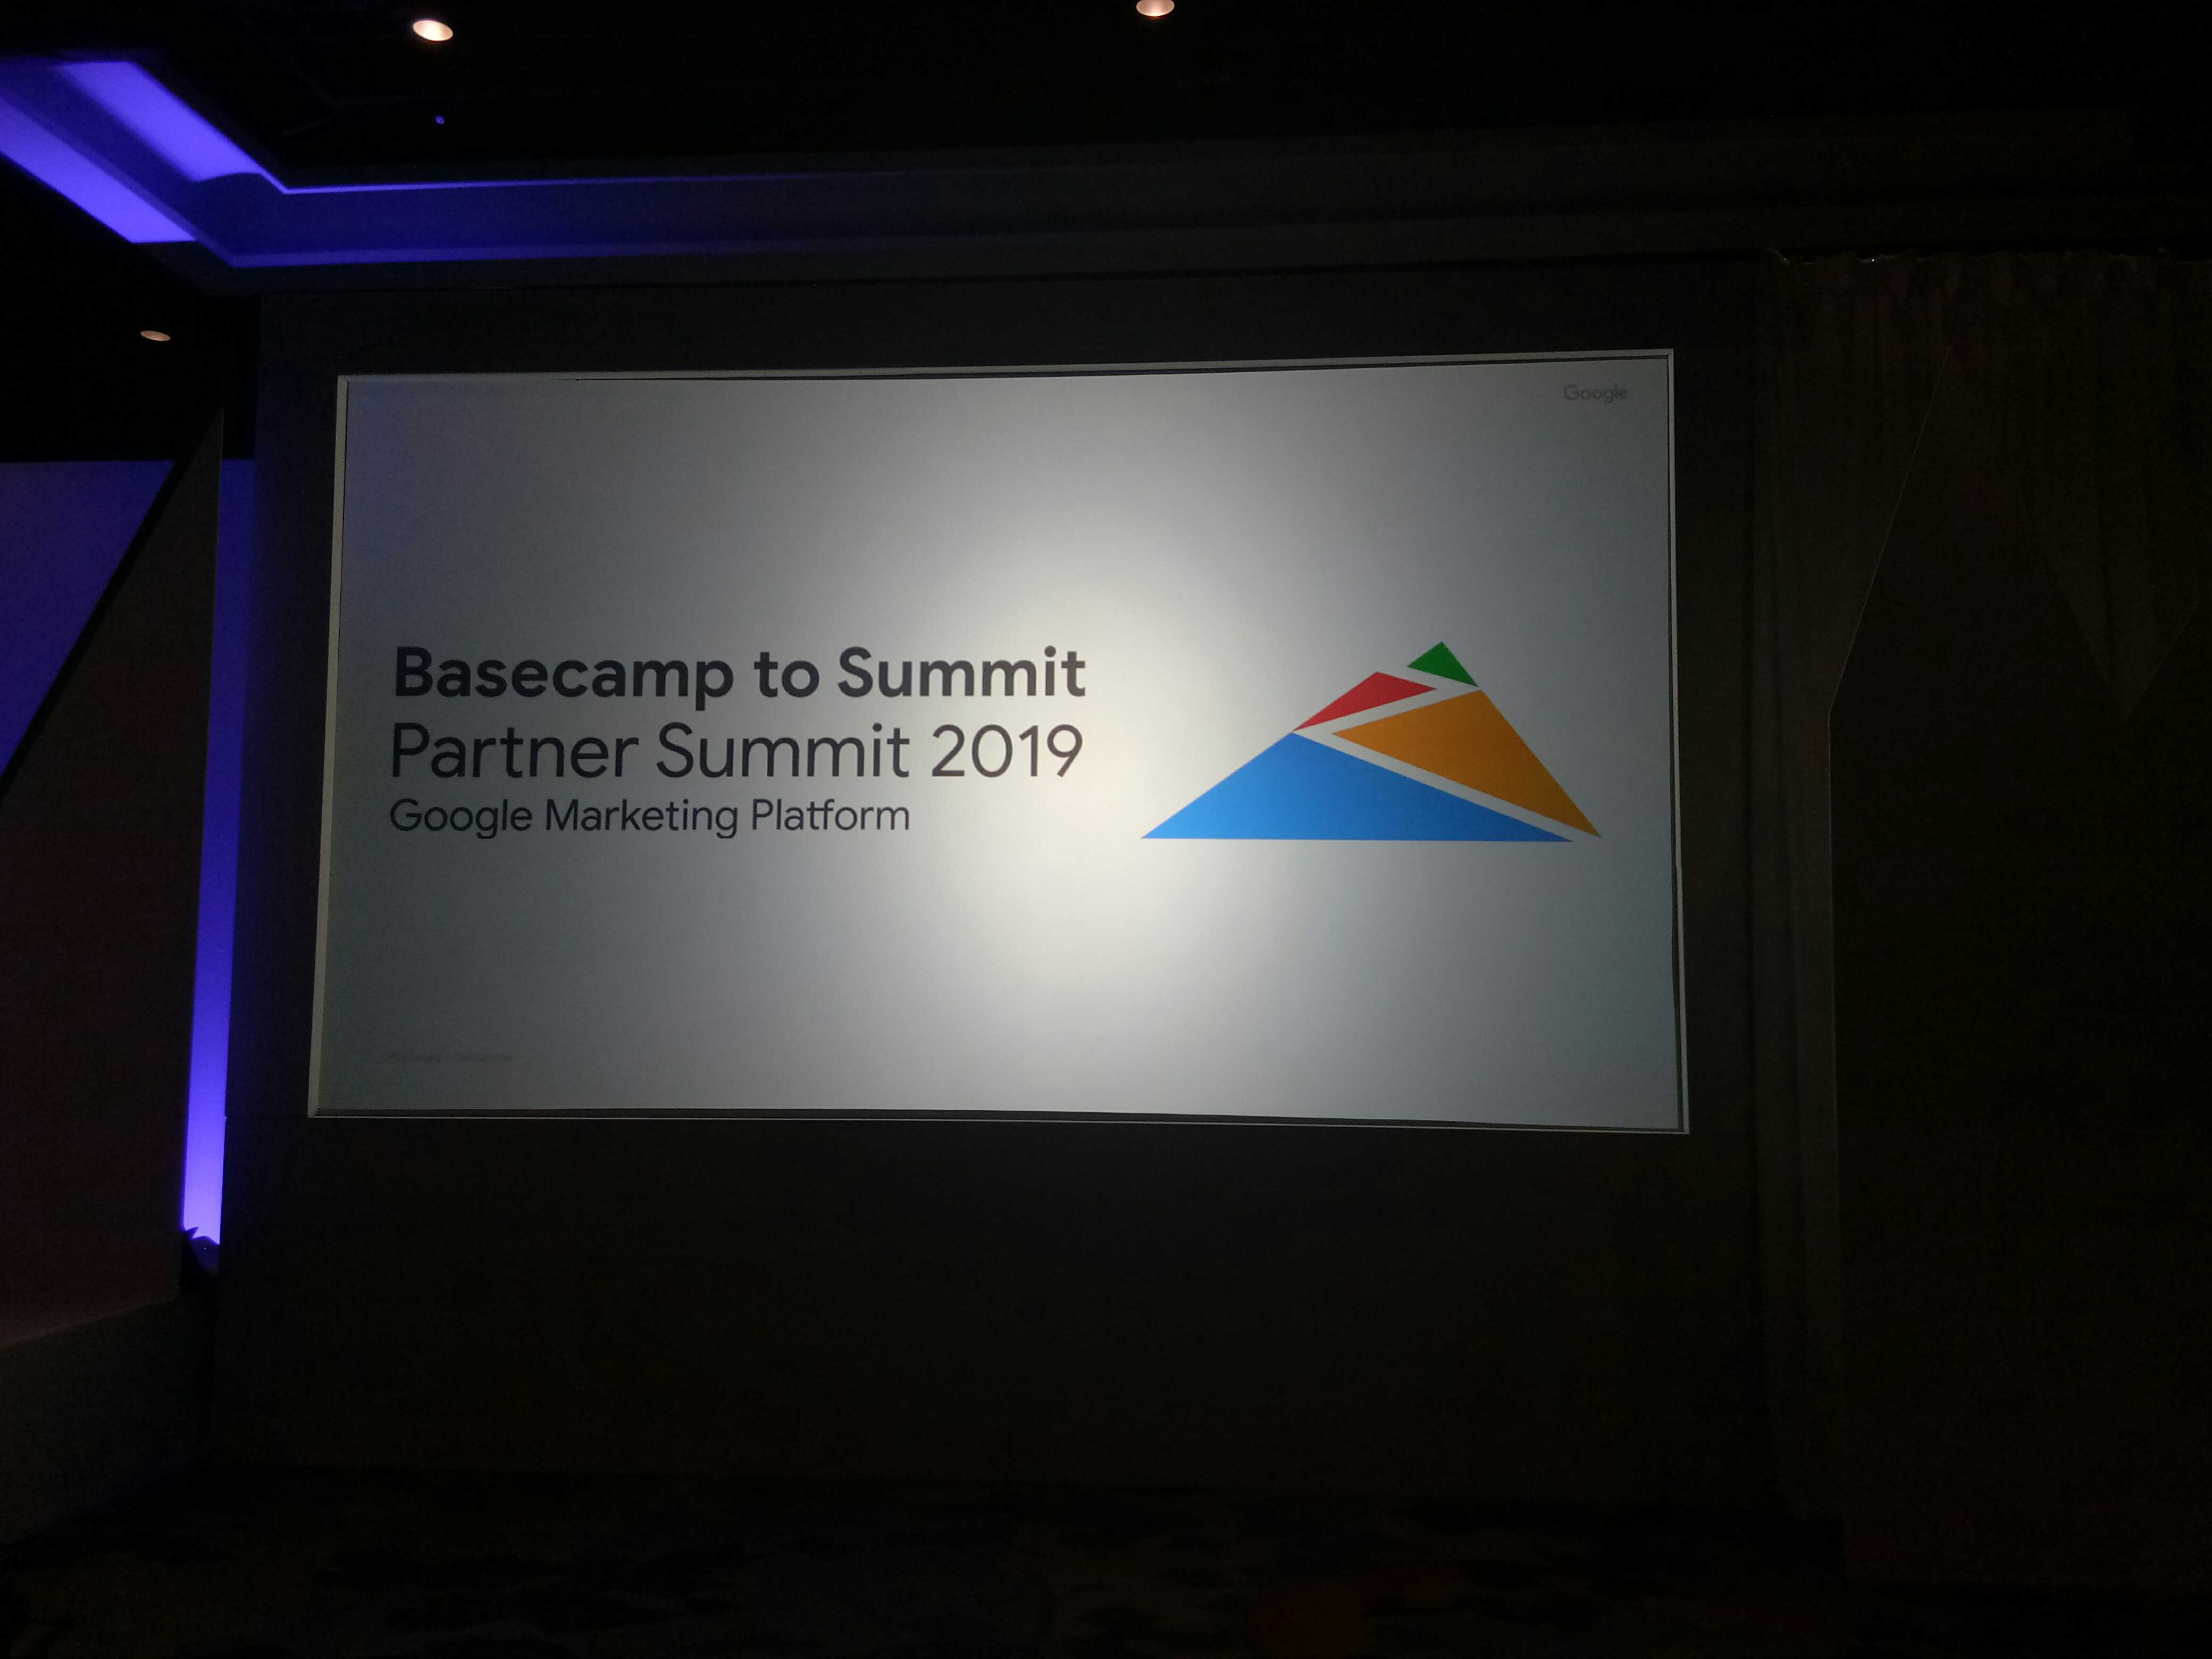 Basecamp to Summit - Google Marketing Platform Partner Summit 2019